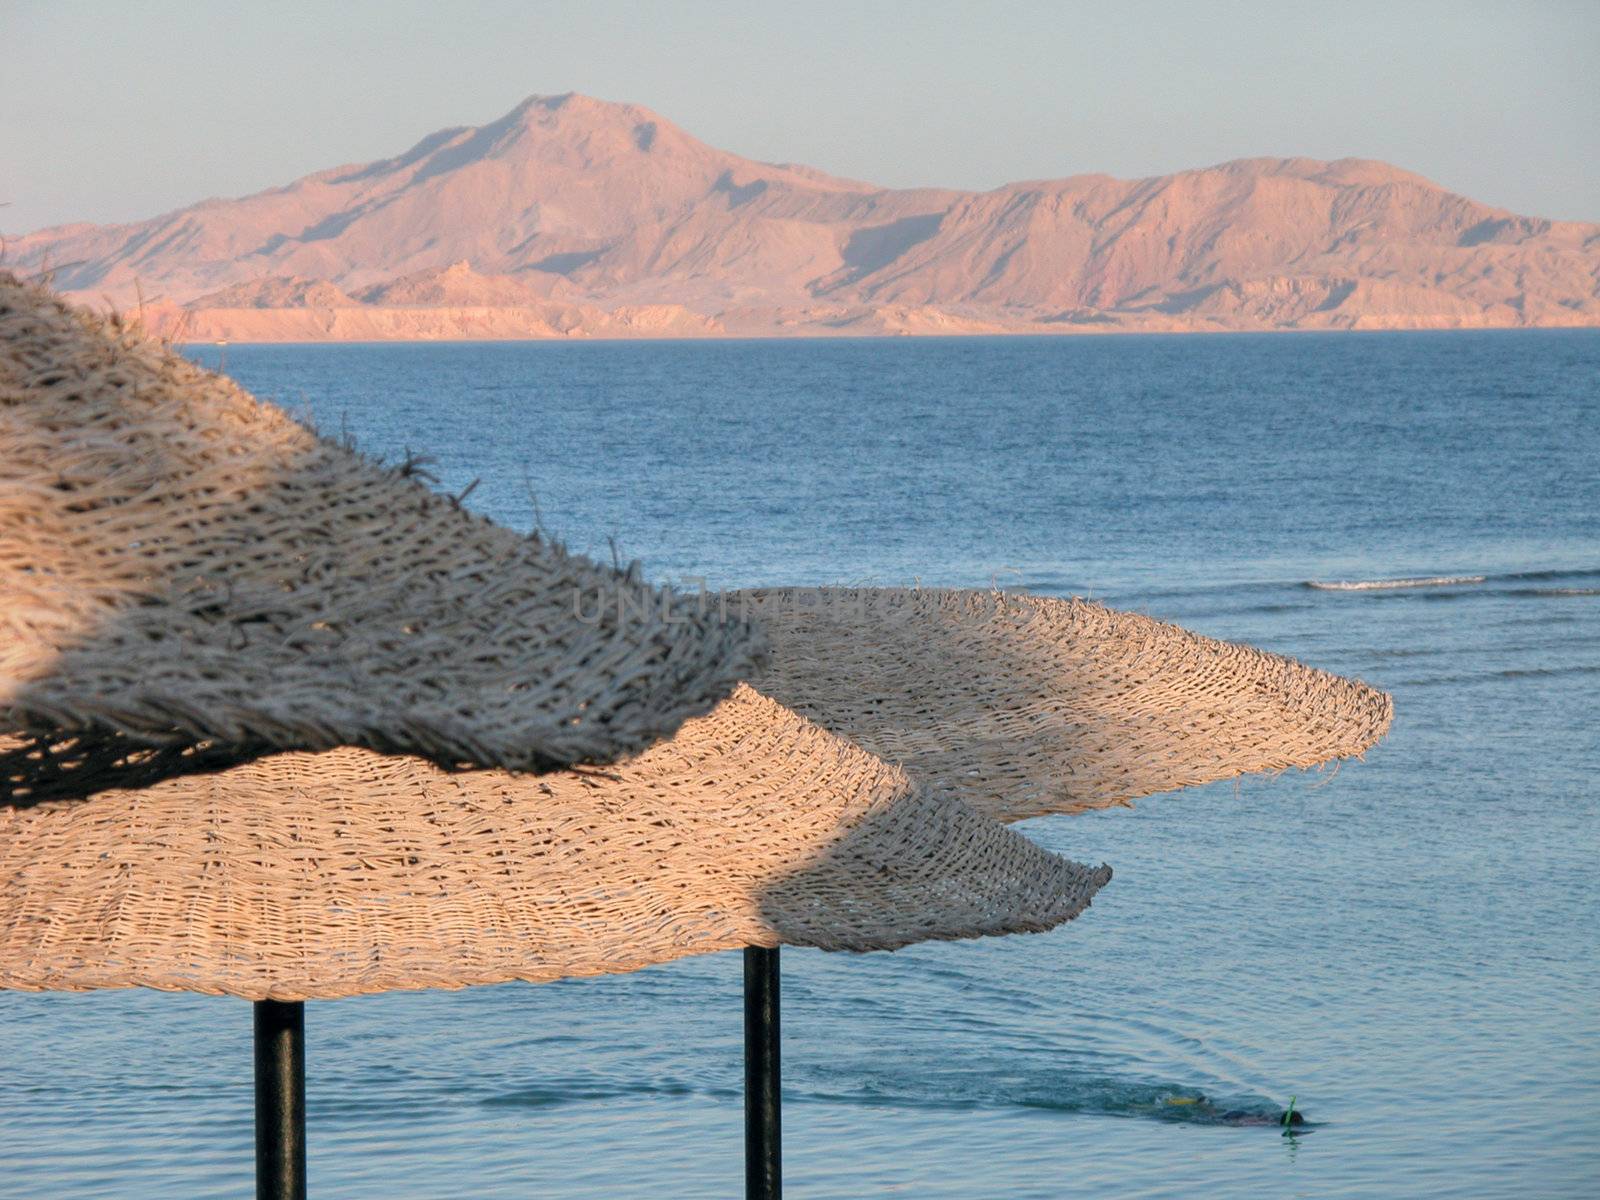 Sea Umbrellas and Scenic View in Sharm El Sheikh, Egypt